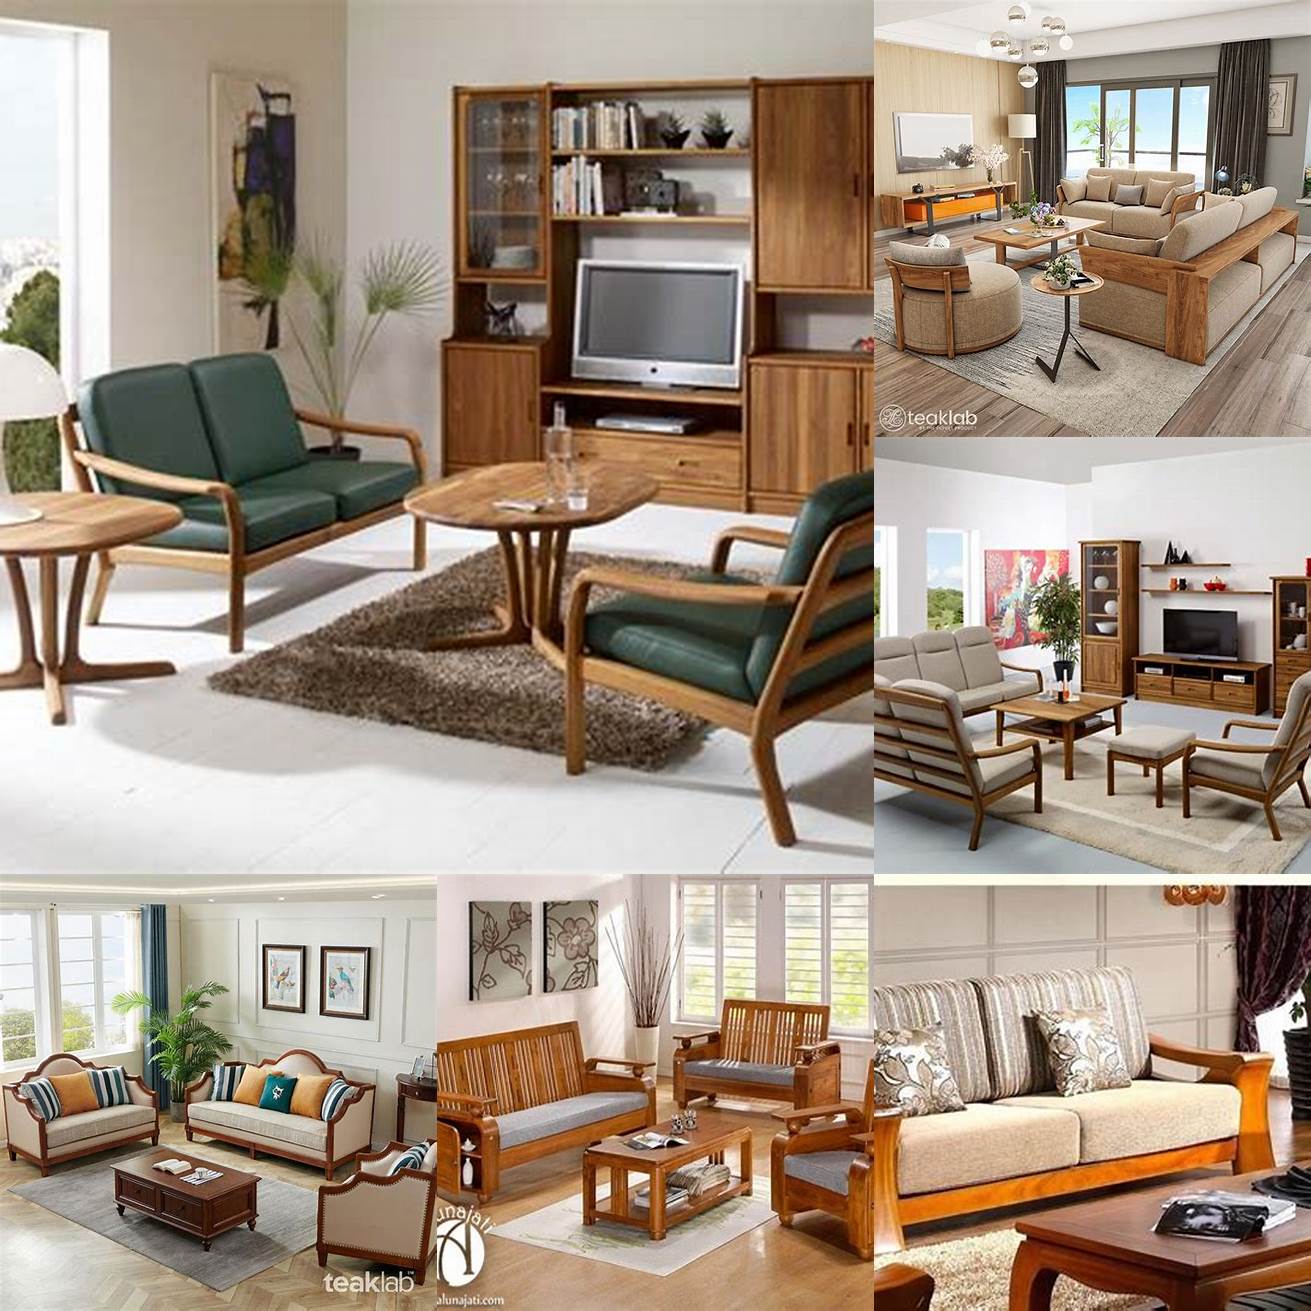 Teak wood furniture in a modern living room